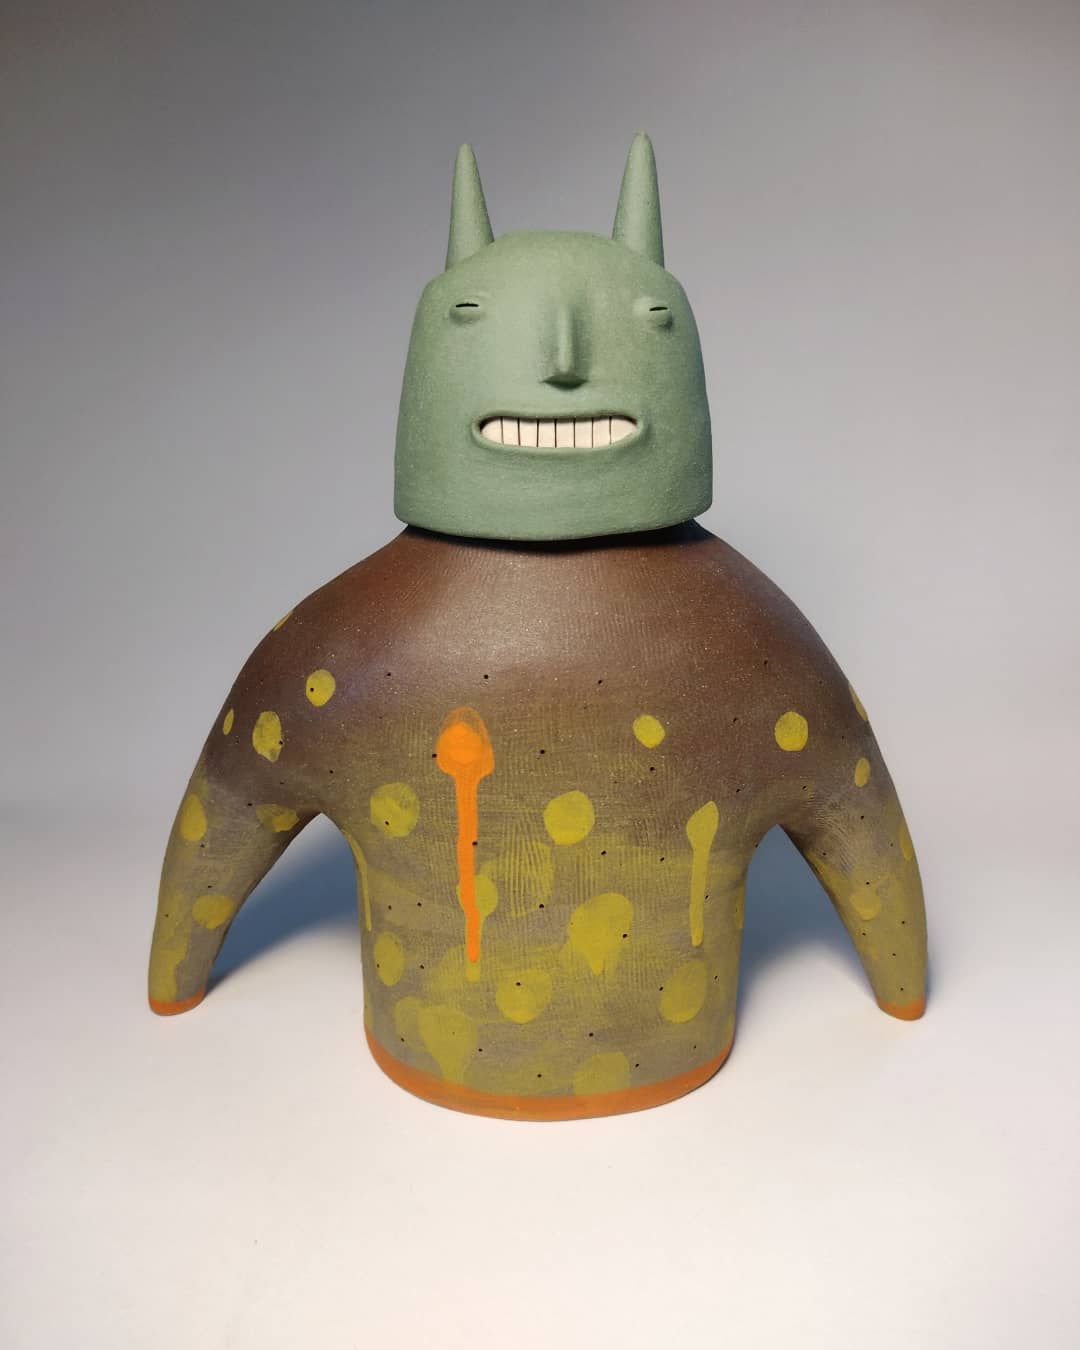 Amusing Ceramic Sculptures Of Quirky Creatures By Luciano Polverigiani (29)